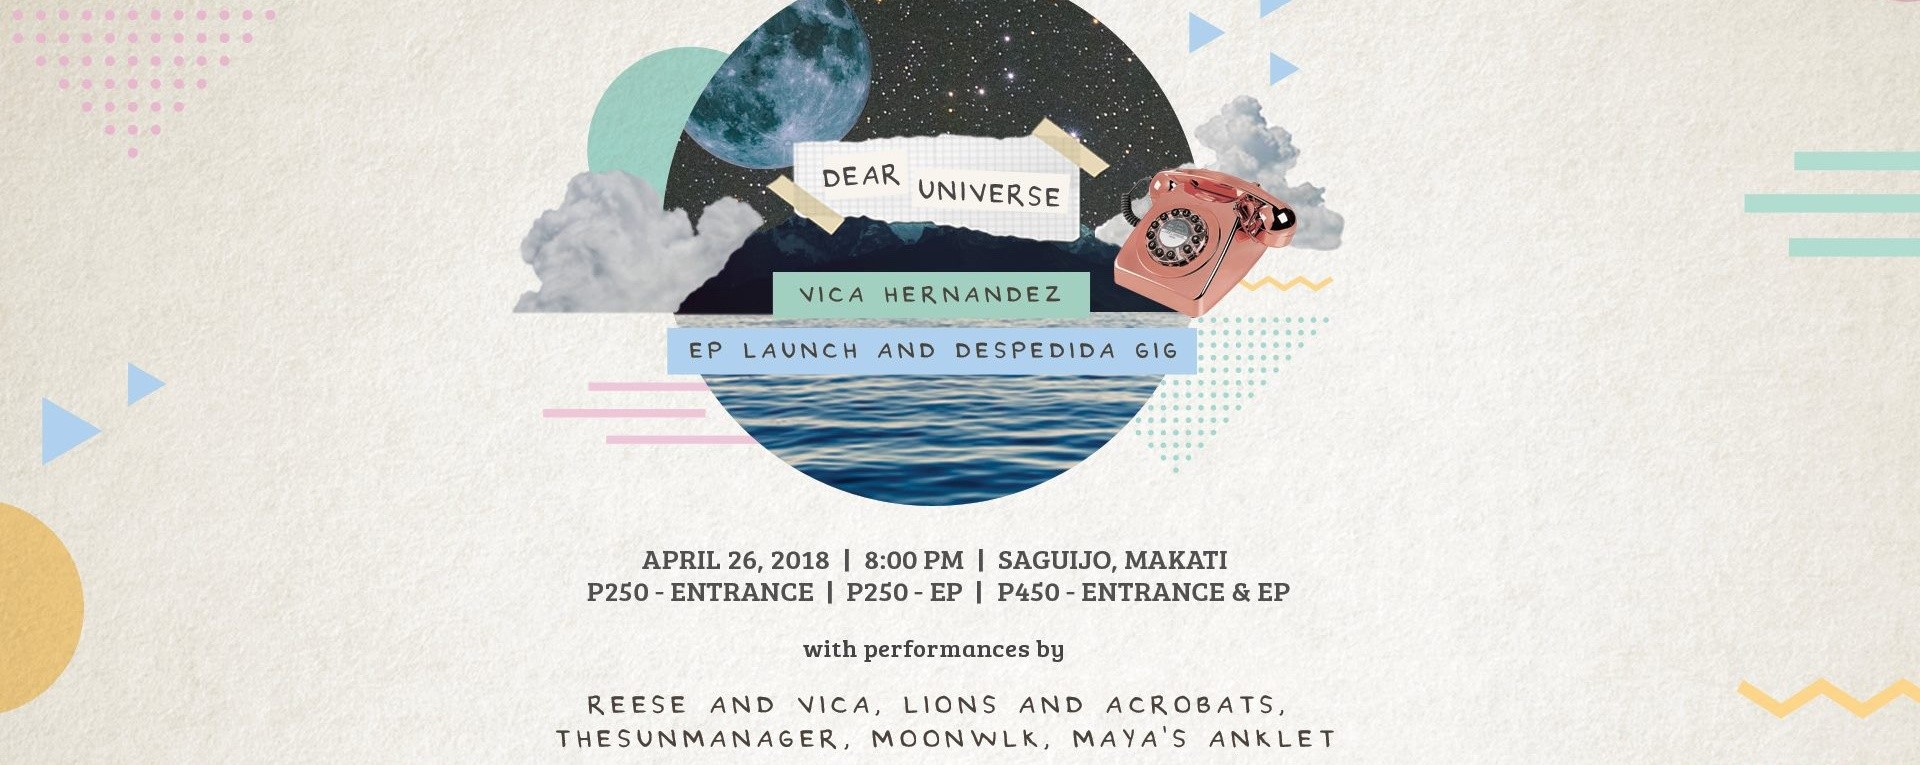 Dear Universe: Vica Hernandez's EP Launch and Despedida Gig